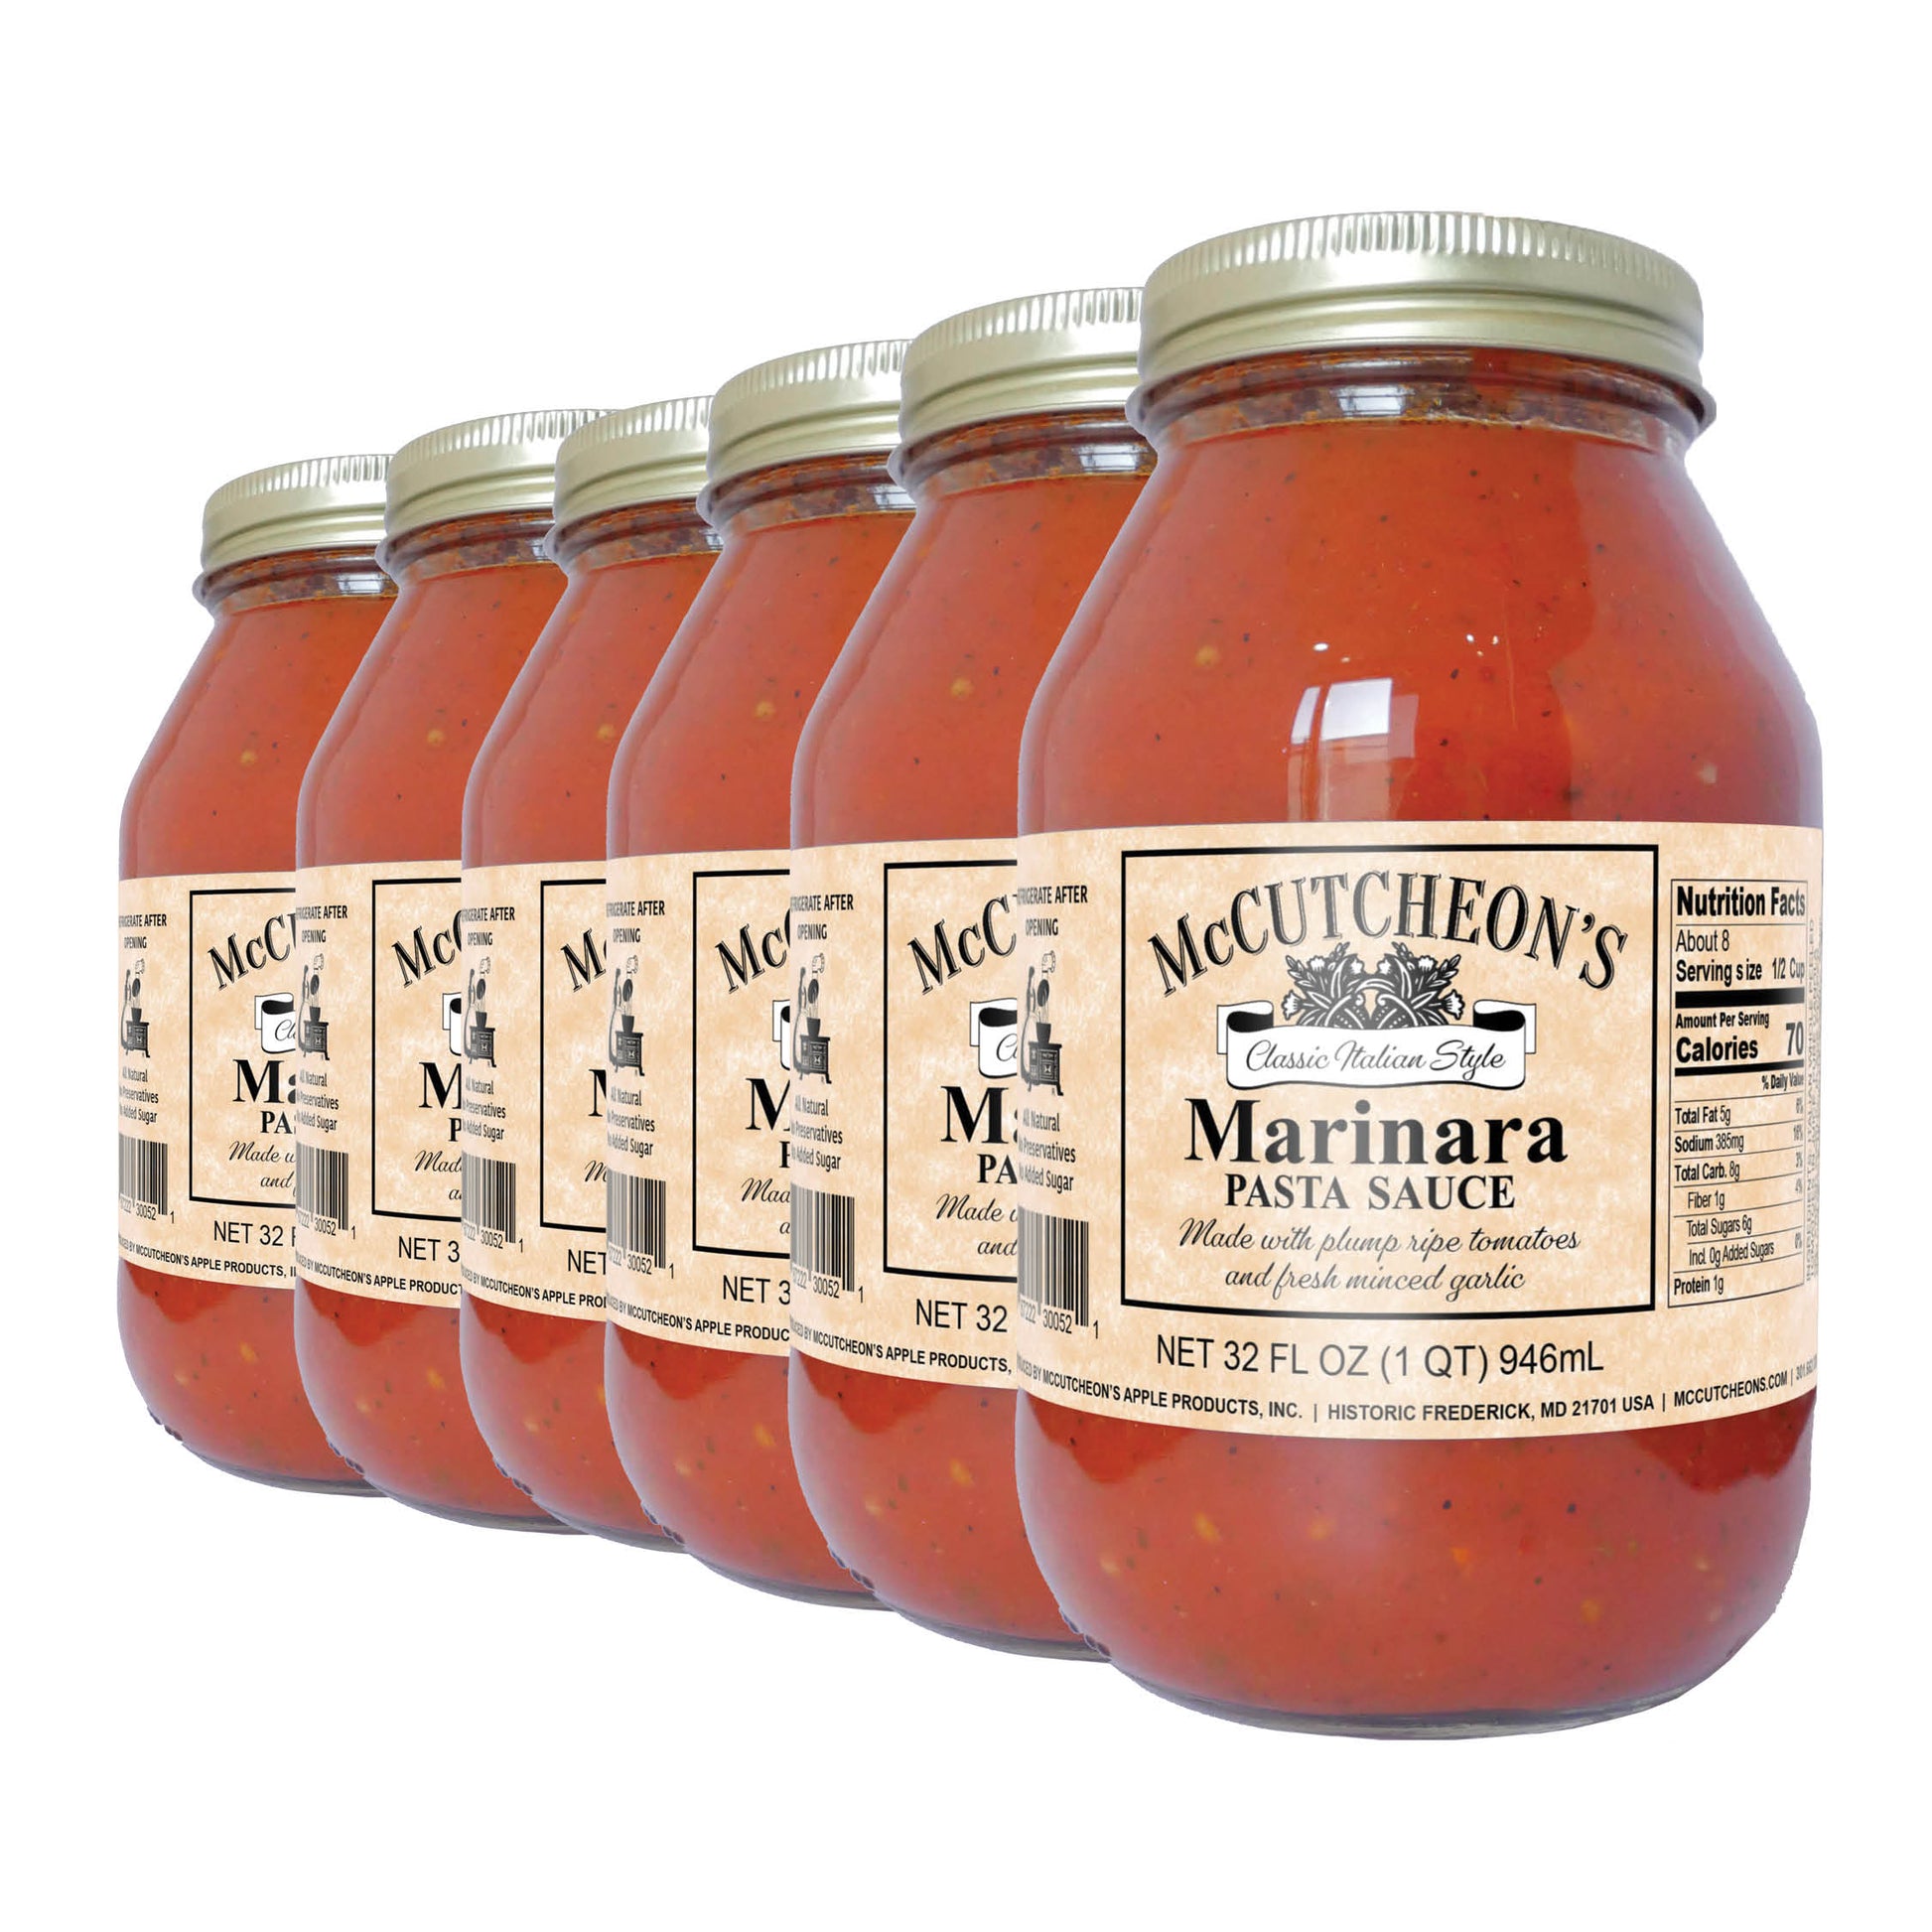 6 quart jars bundle of McCutcheon's marinara pasta sauce